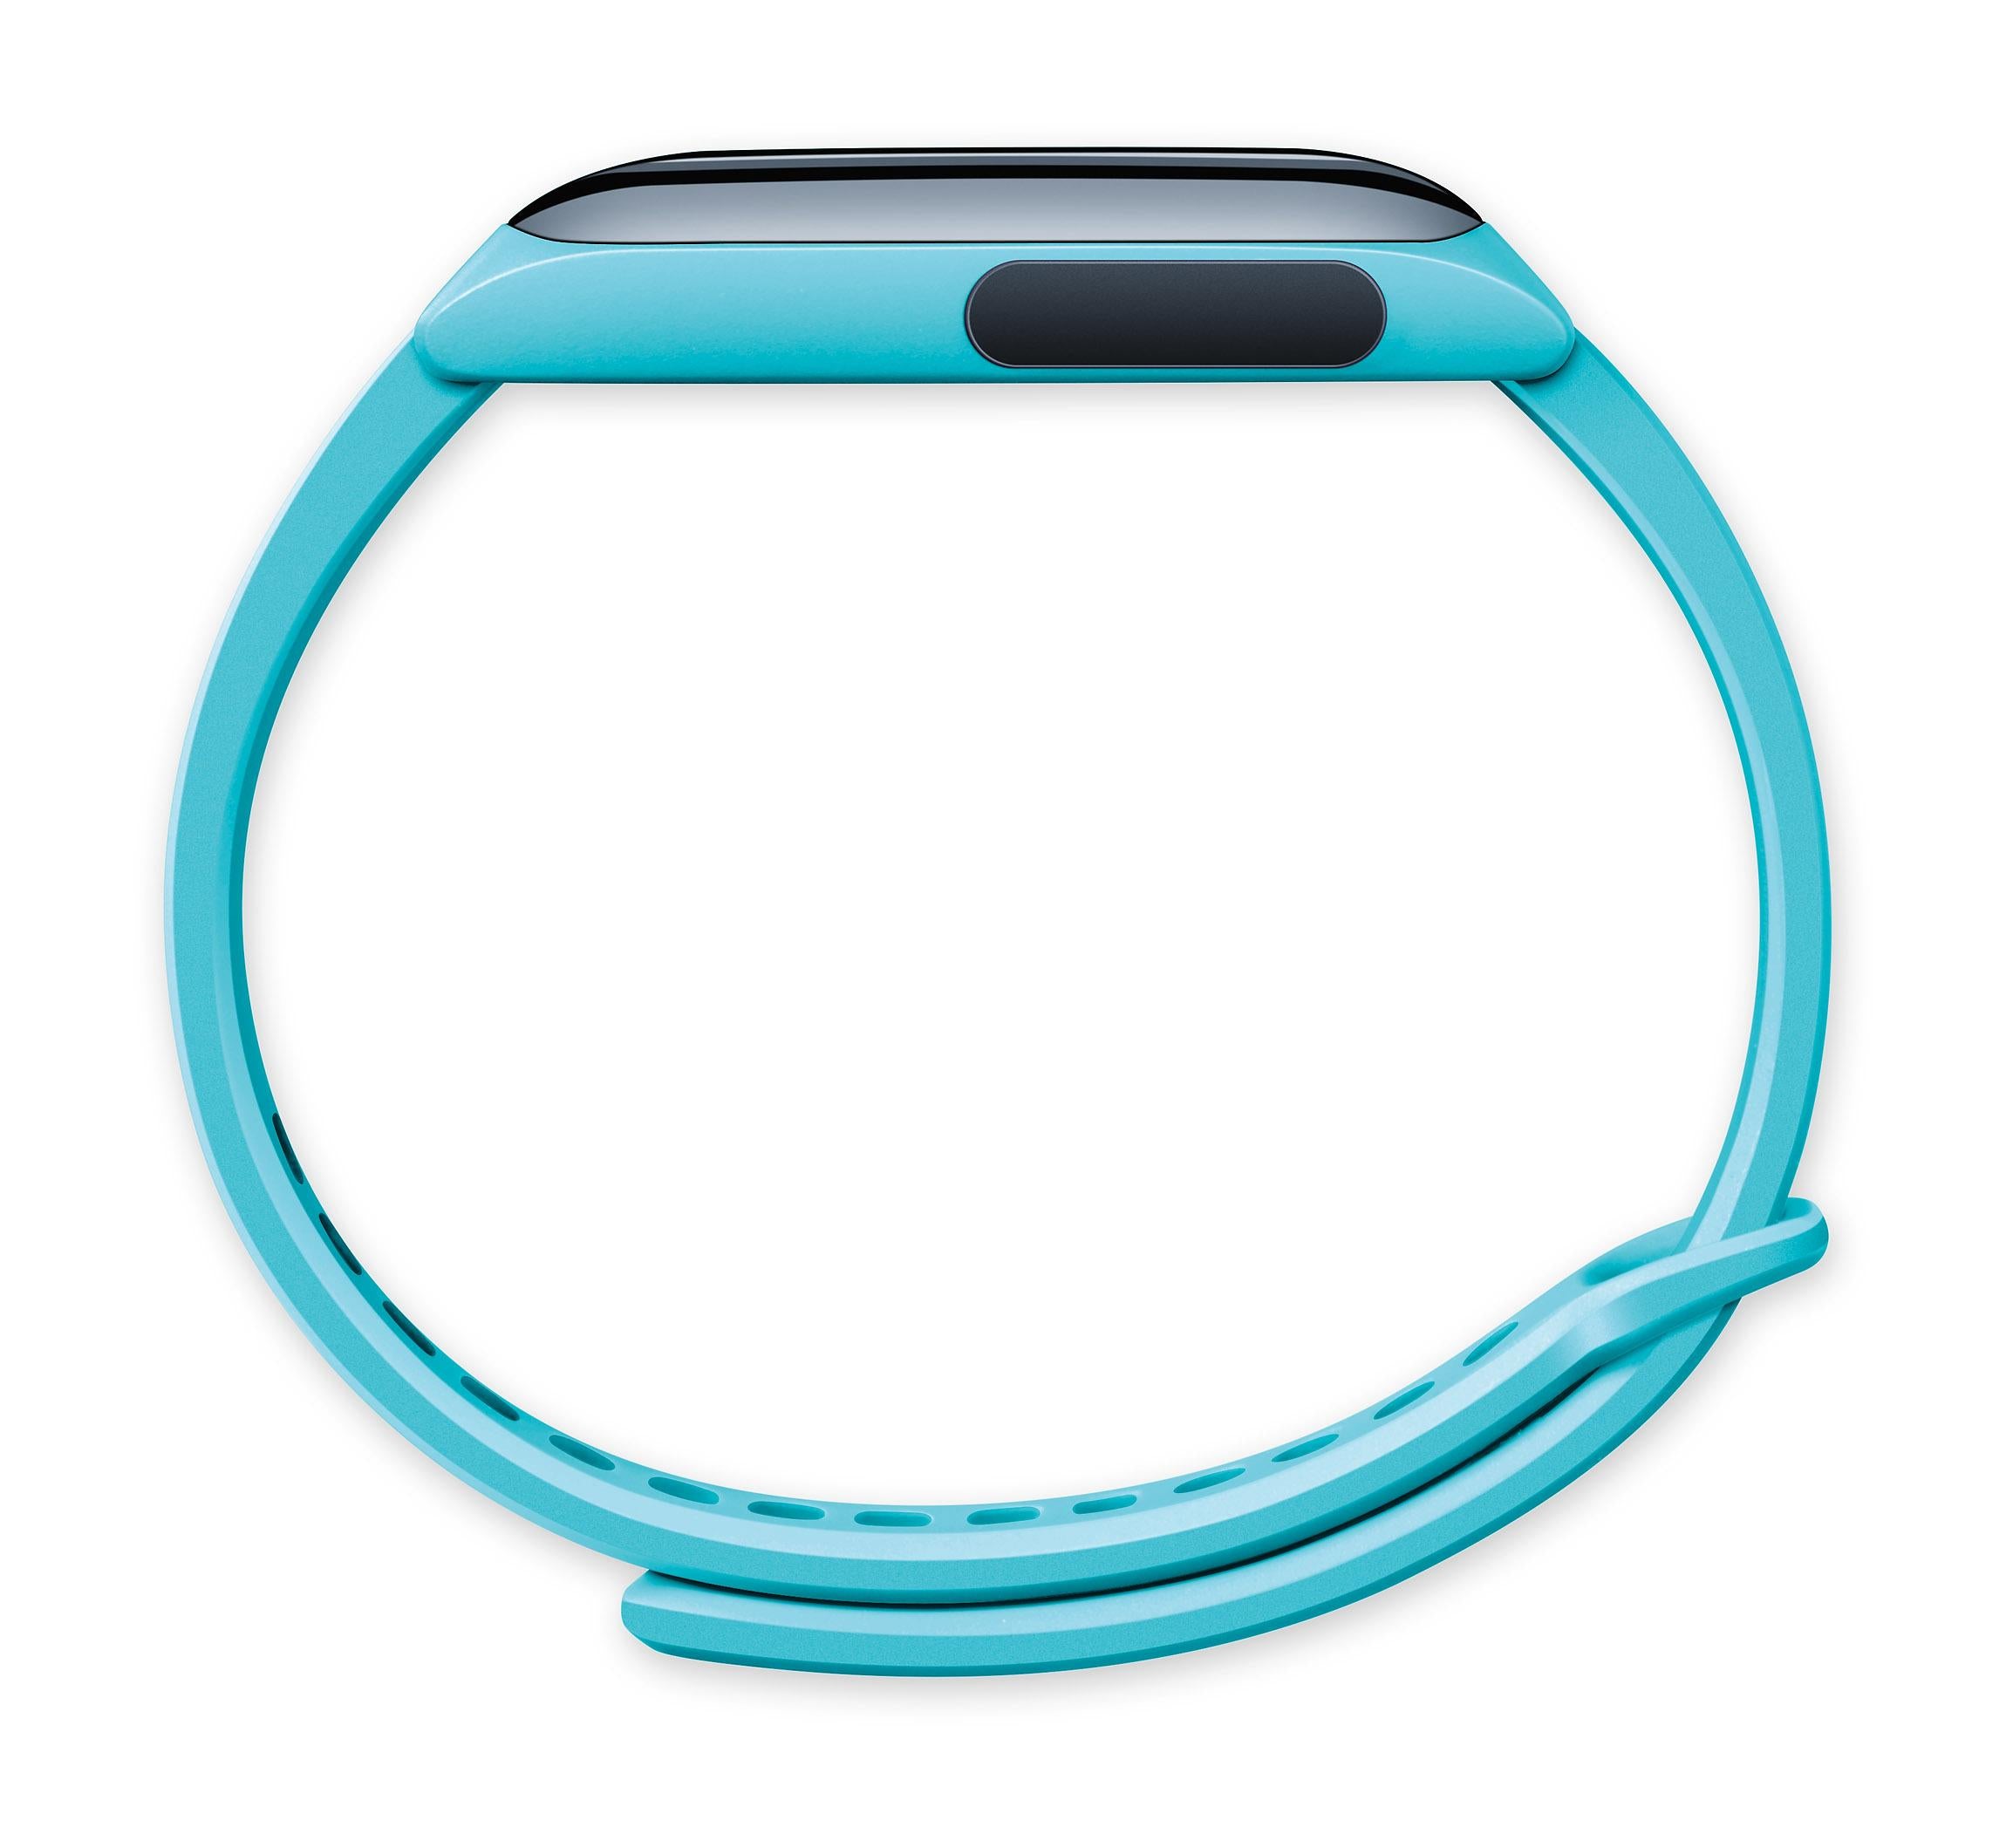 Wrist Fitness Tracker AS 81 BodyShape Turquoise + App Beurer - Omninela Medical